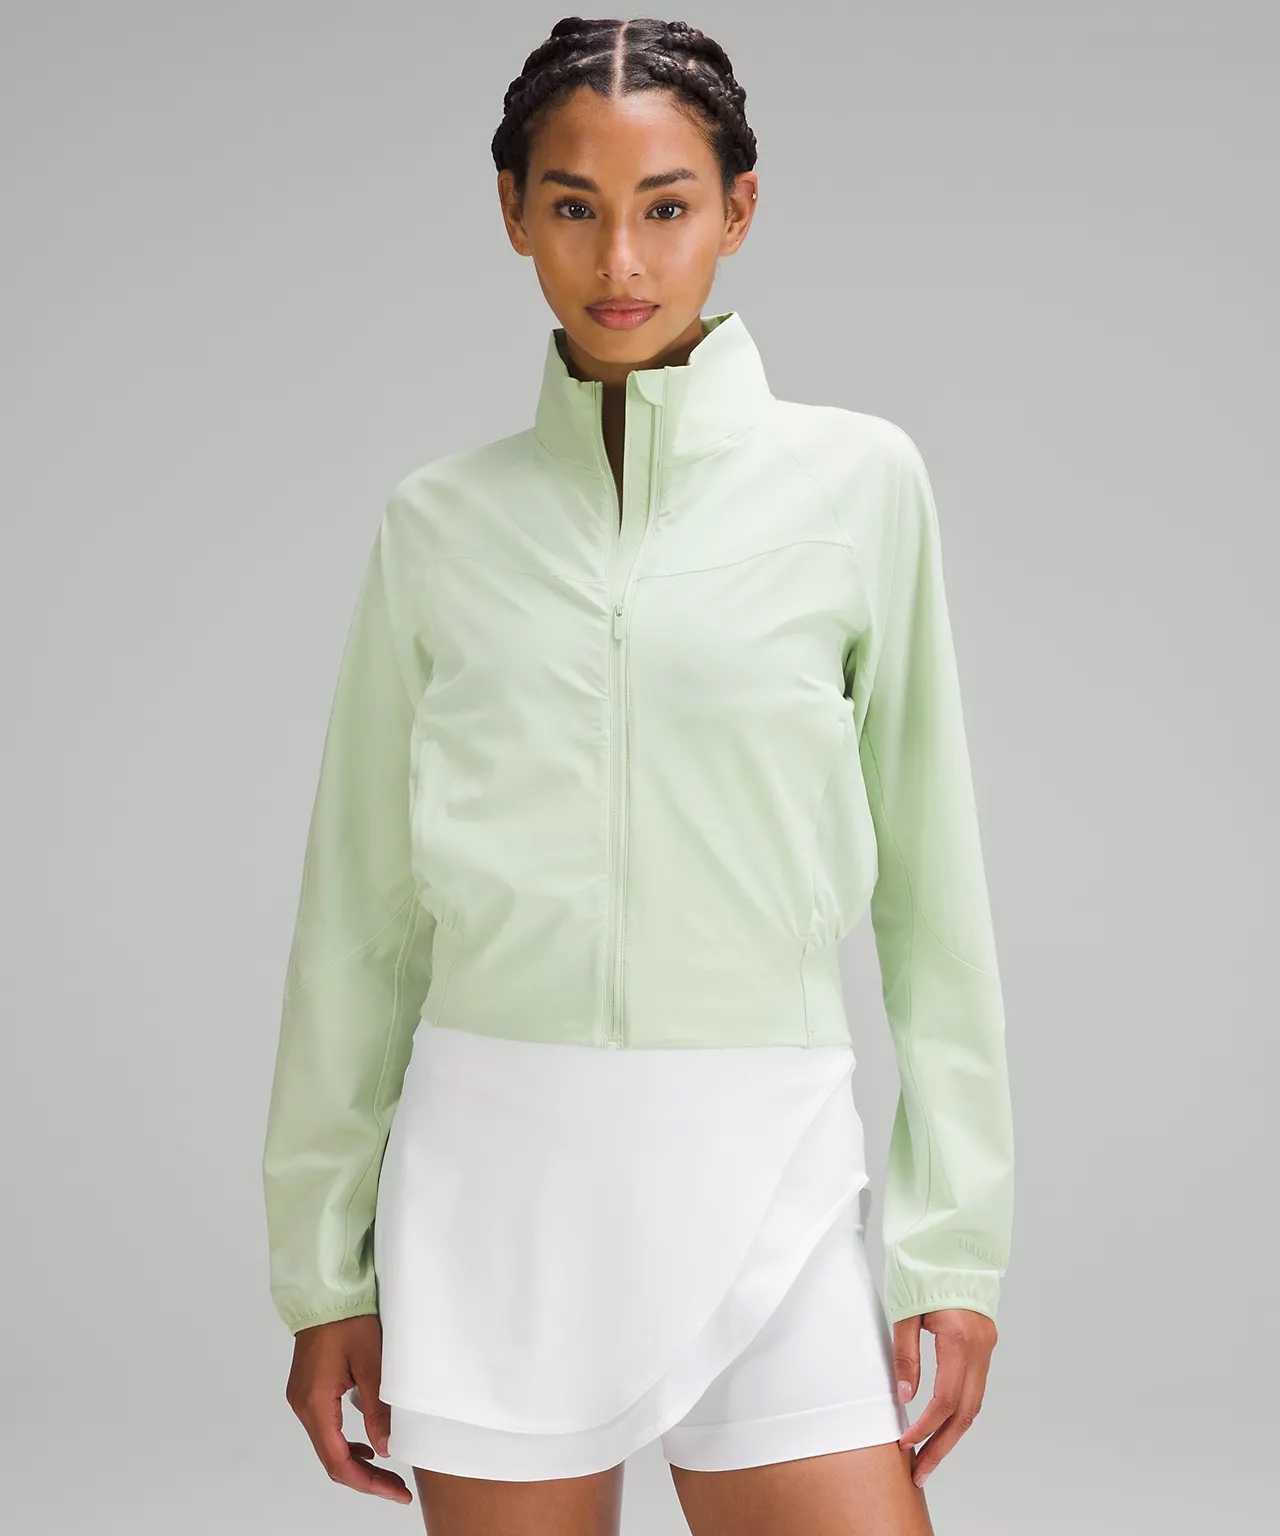 Water-Repellent Stretch Tennis Jacket in neon green